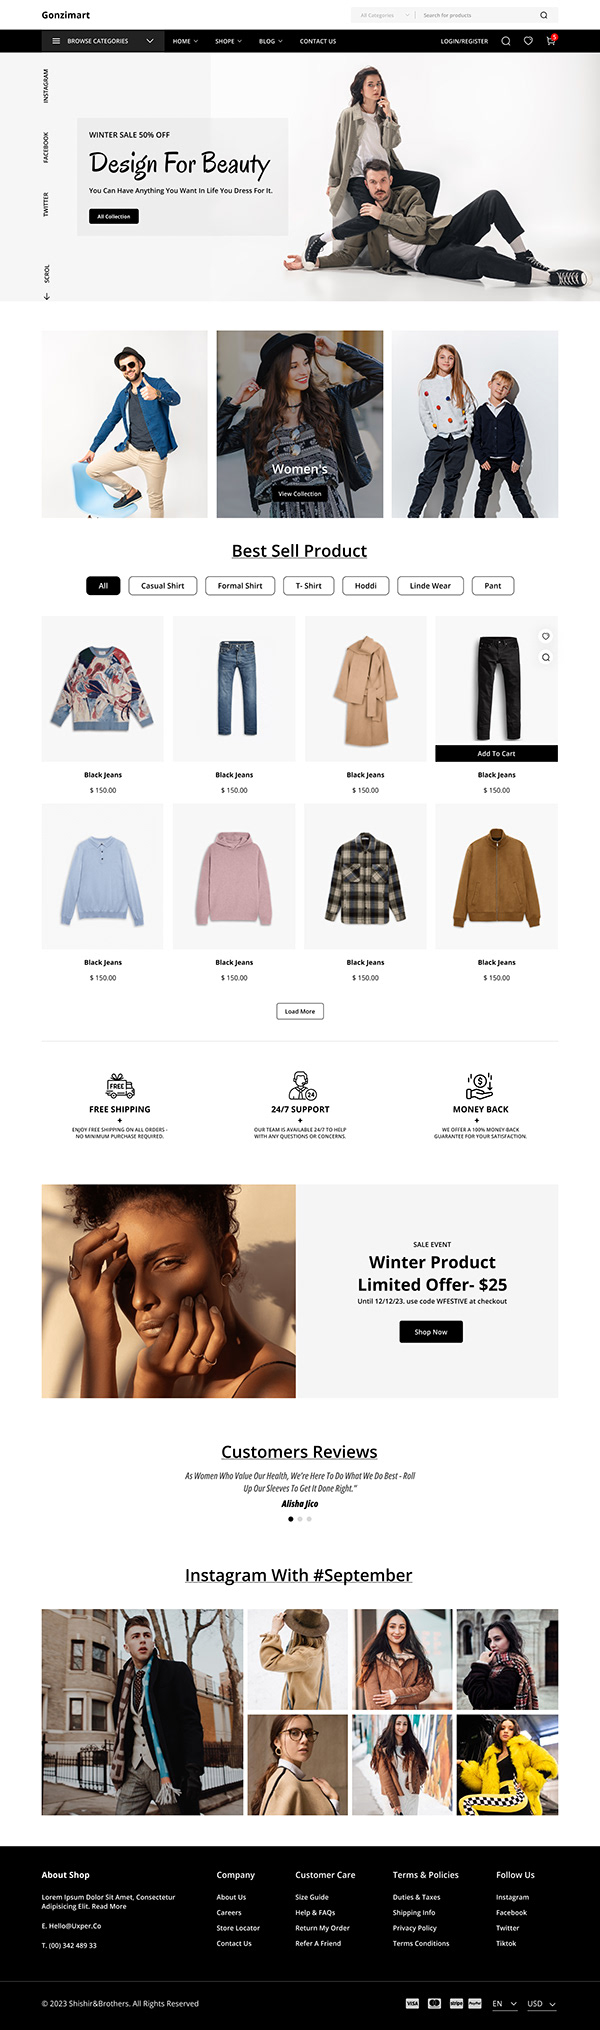 E commerce fashion & beauty website design